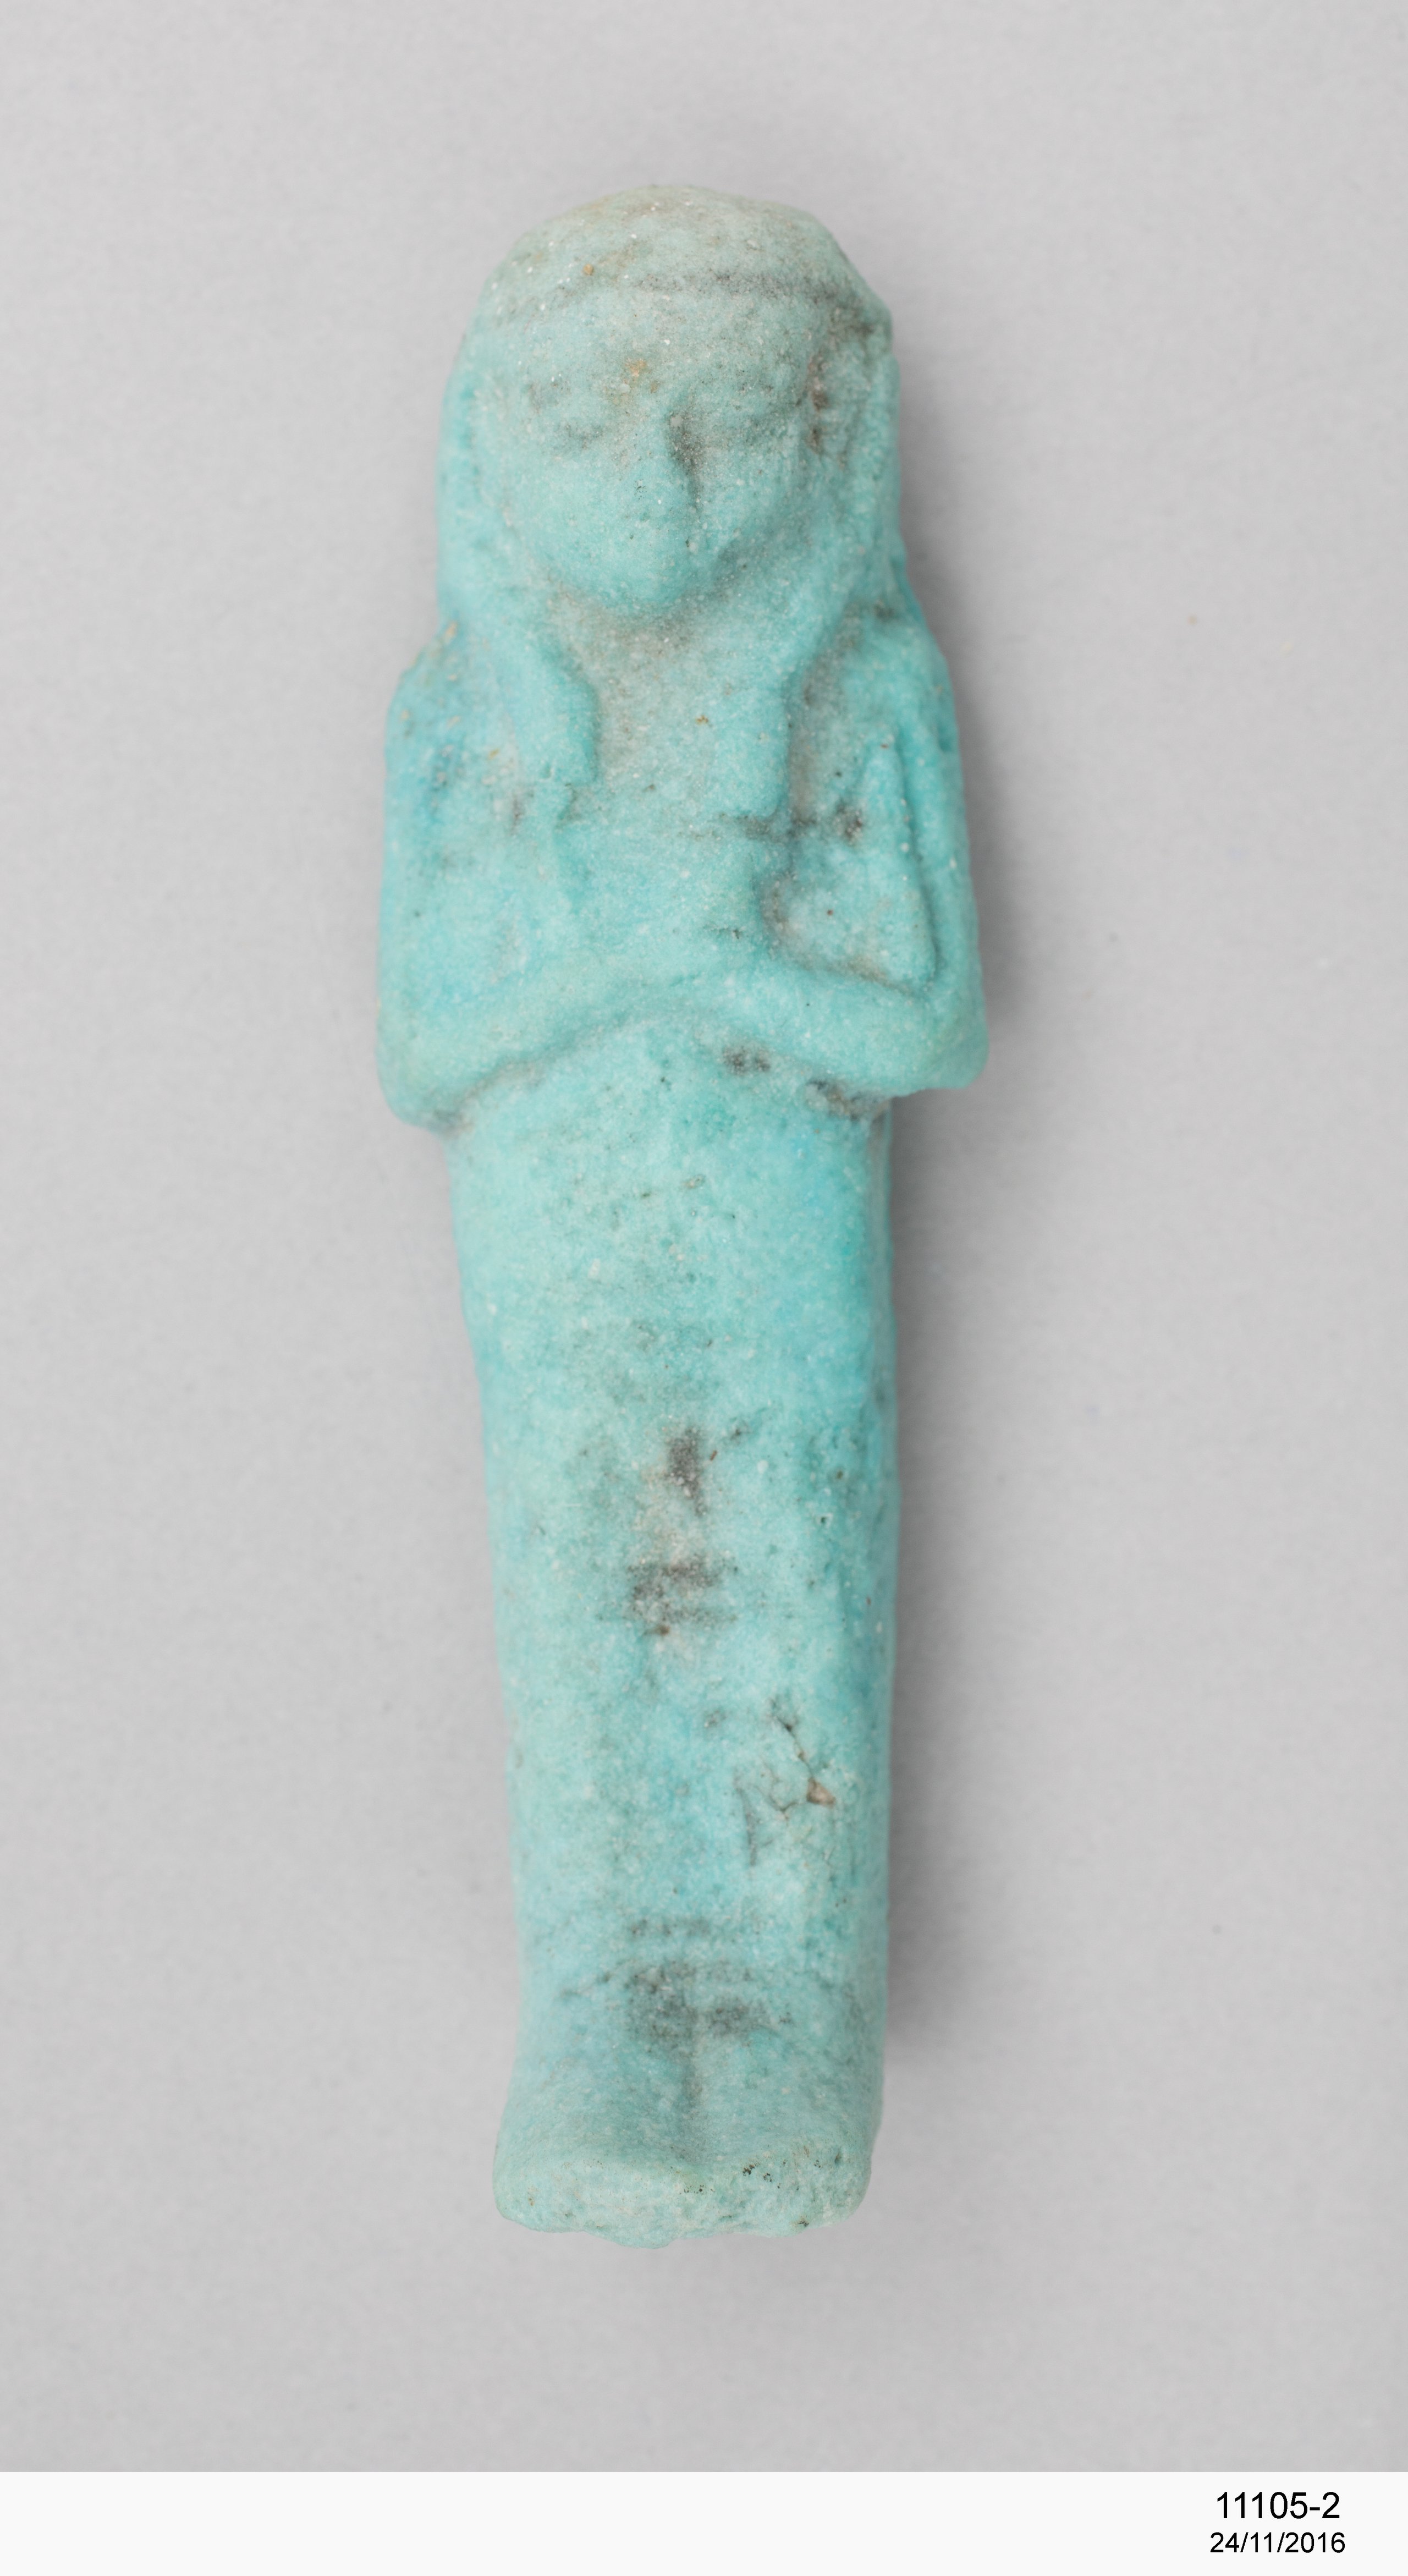 Ancient Egyptian worker ushabti